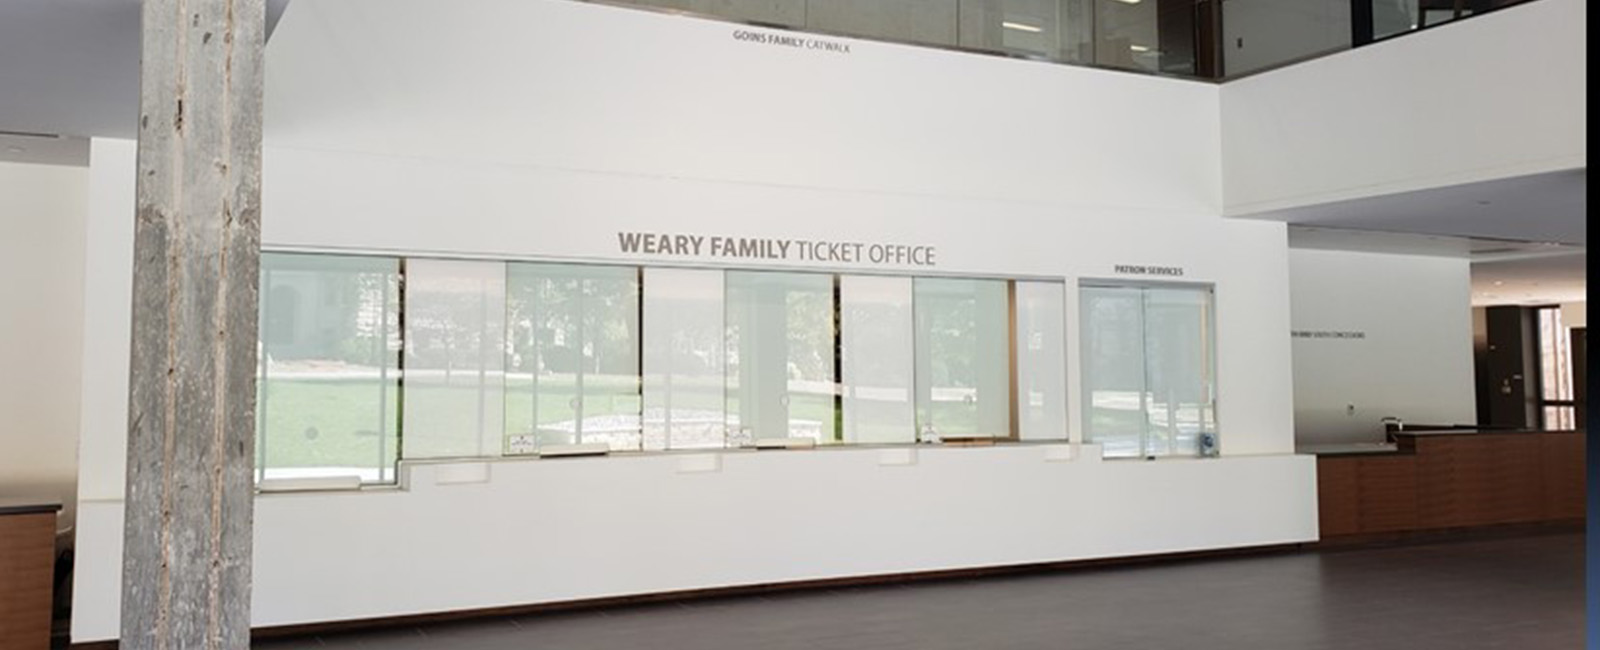 Weary Family Ticket Office